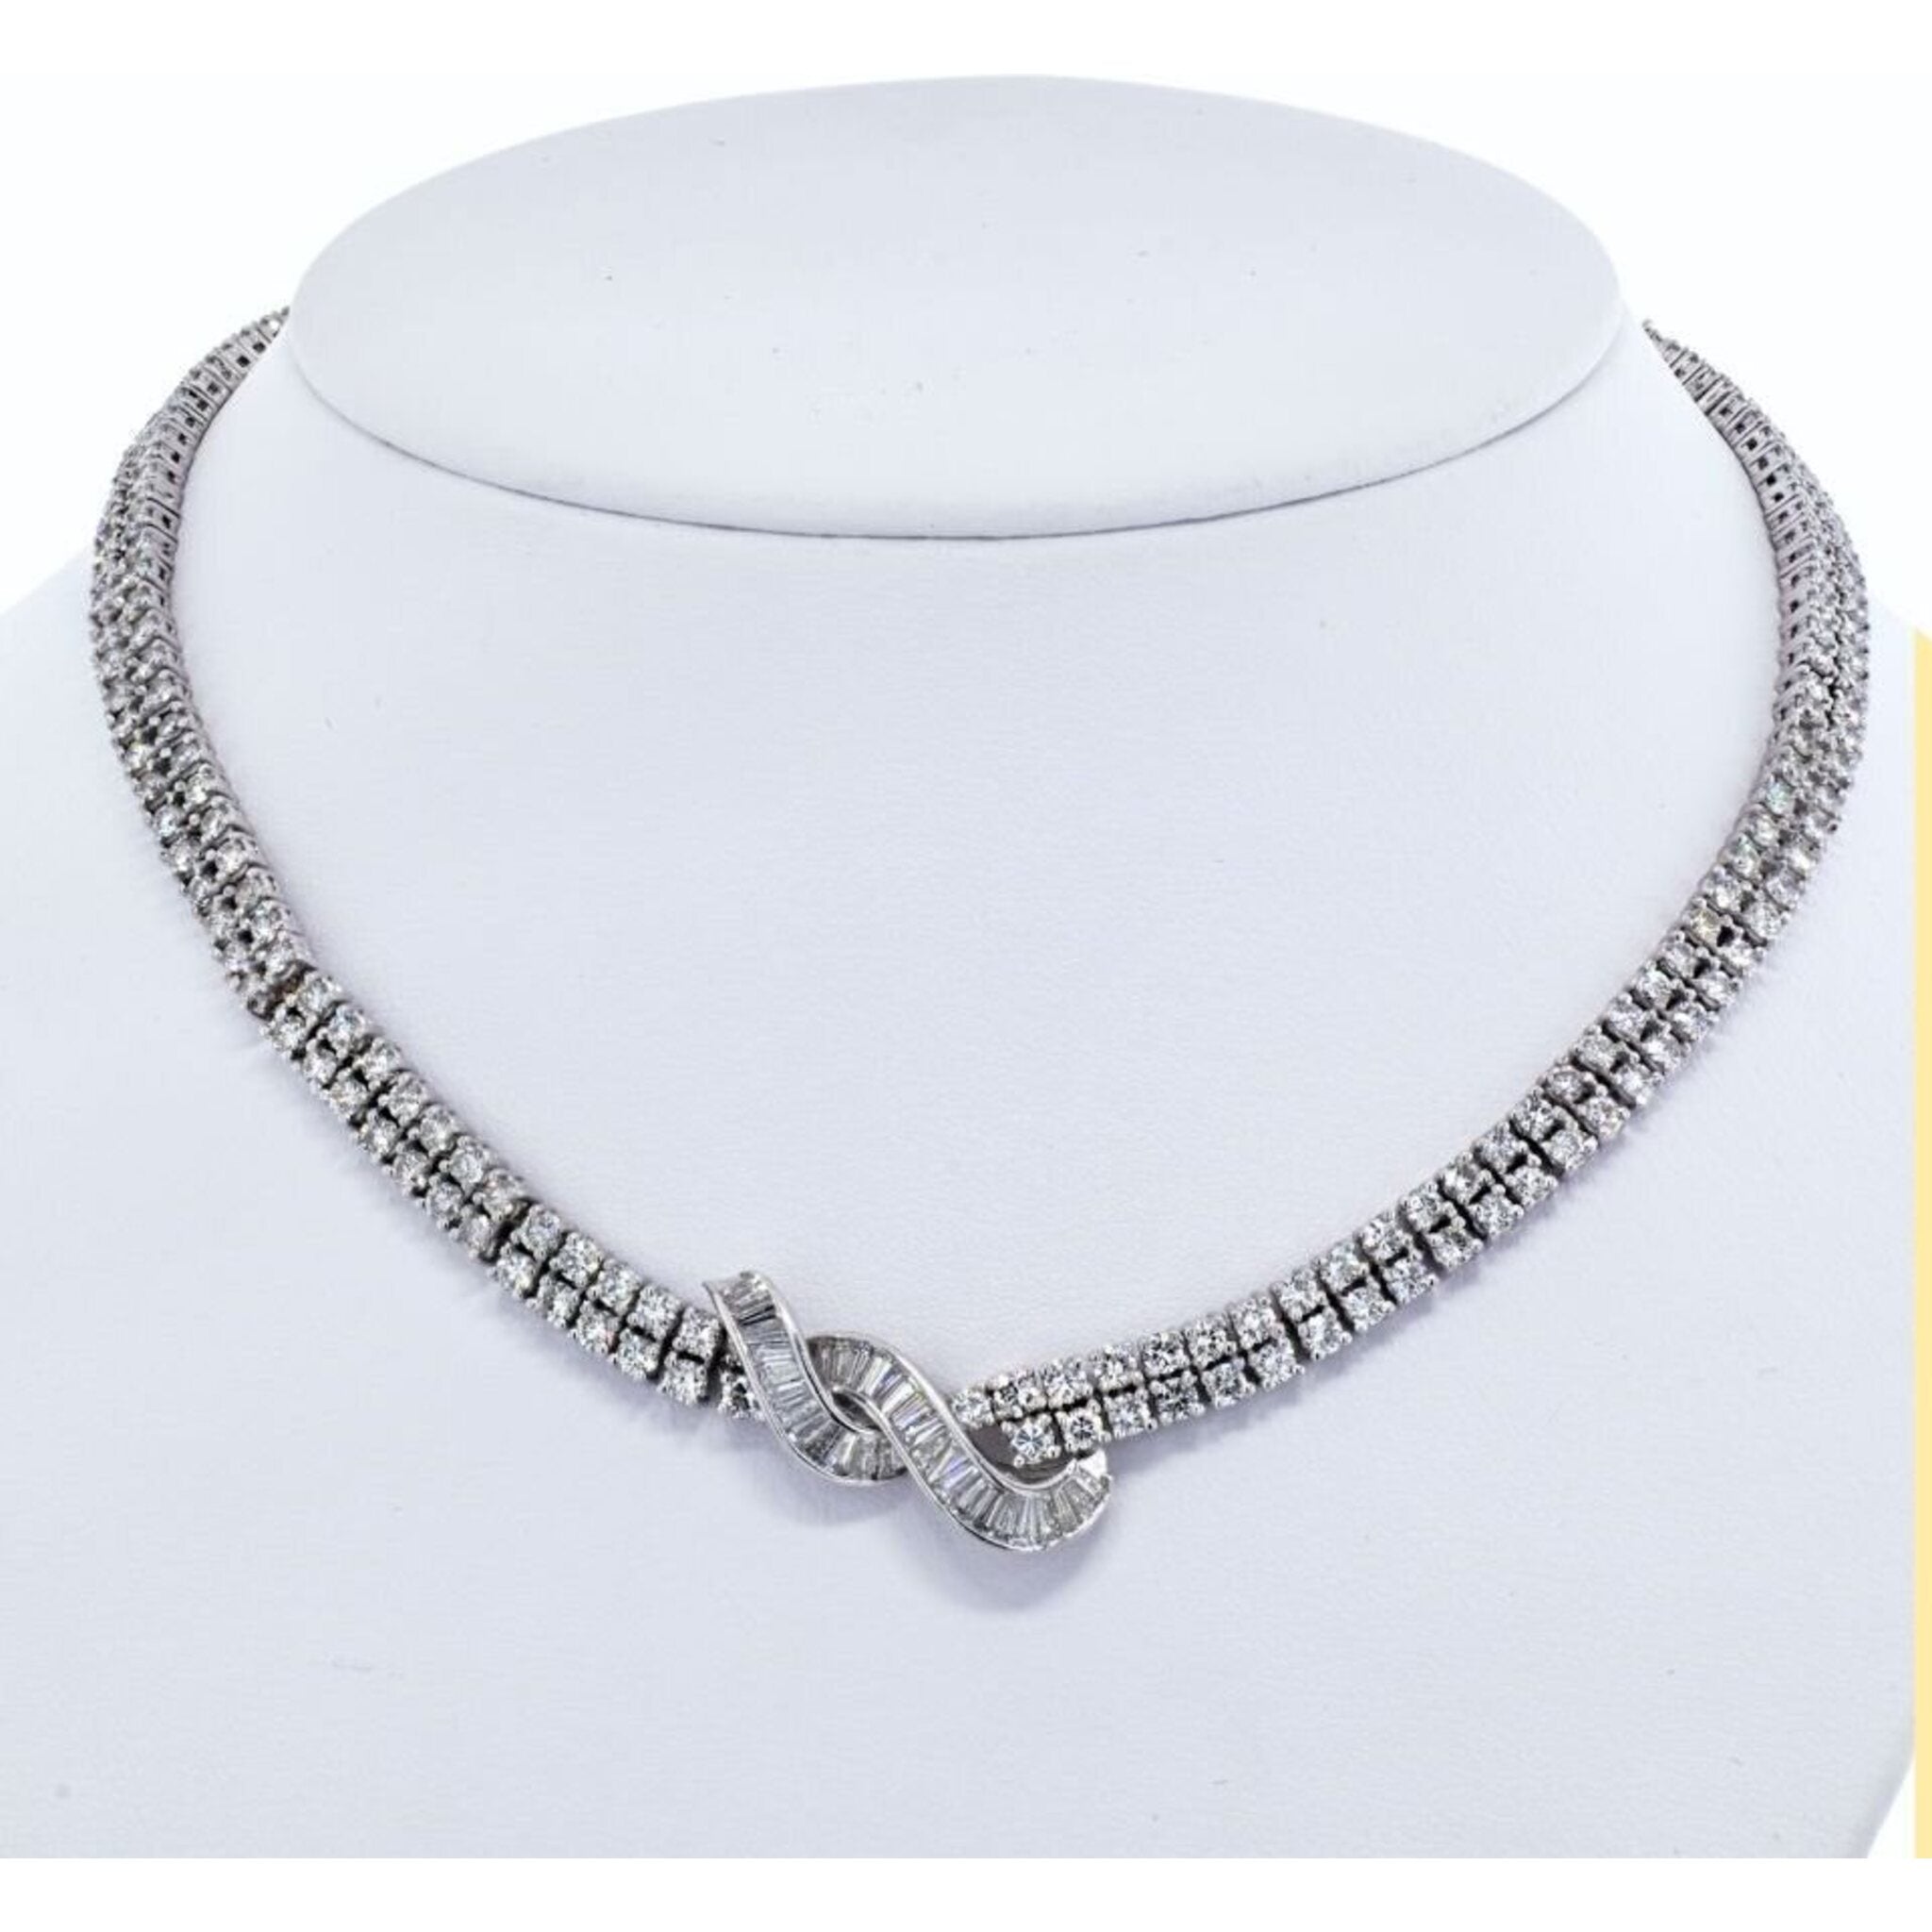 Enzo Tennis Necklace - Luxury Diamond Tennis Chain - IF & Co.